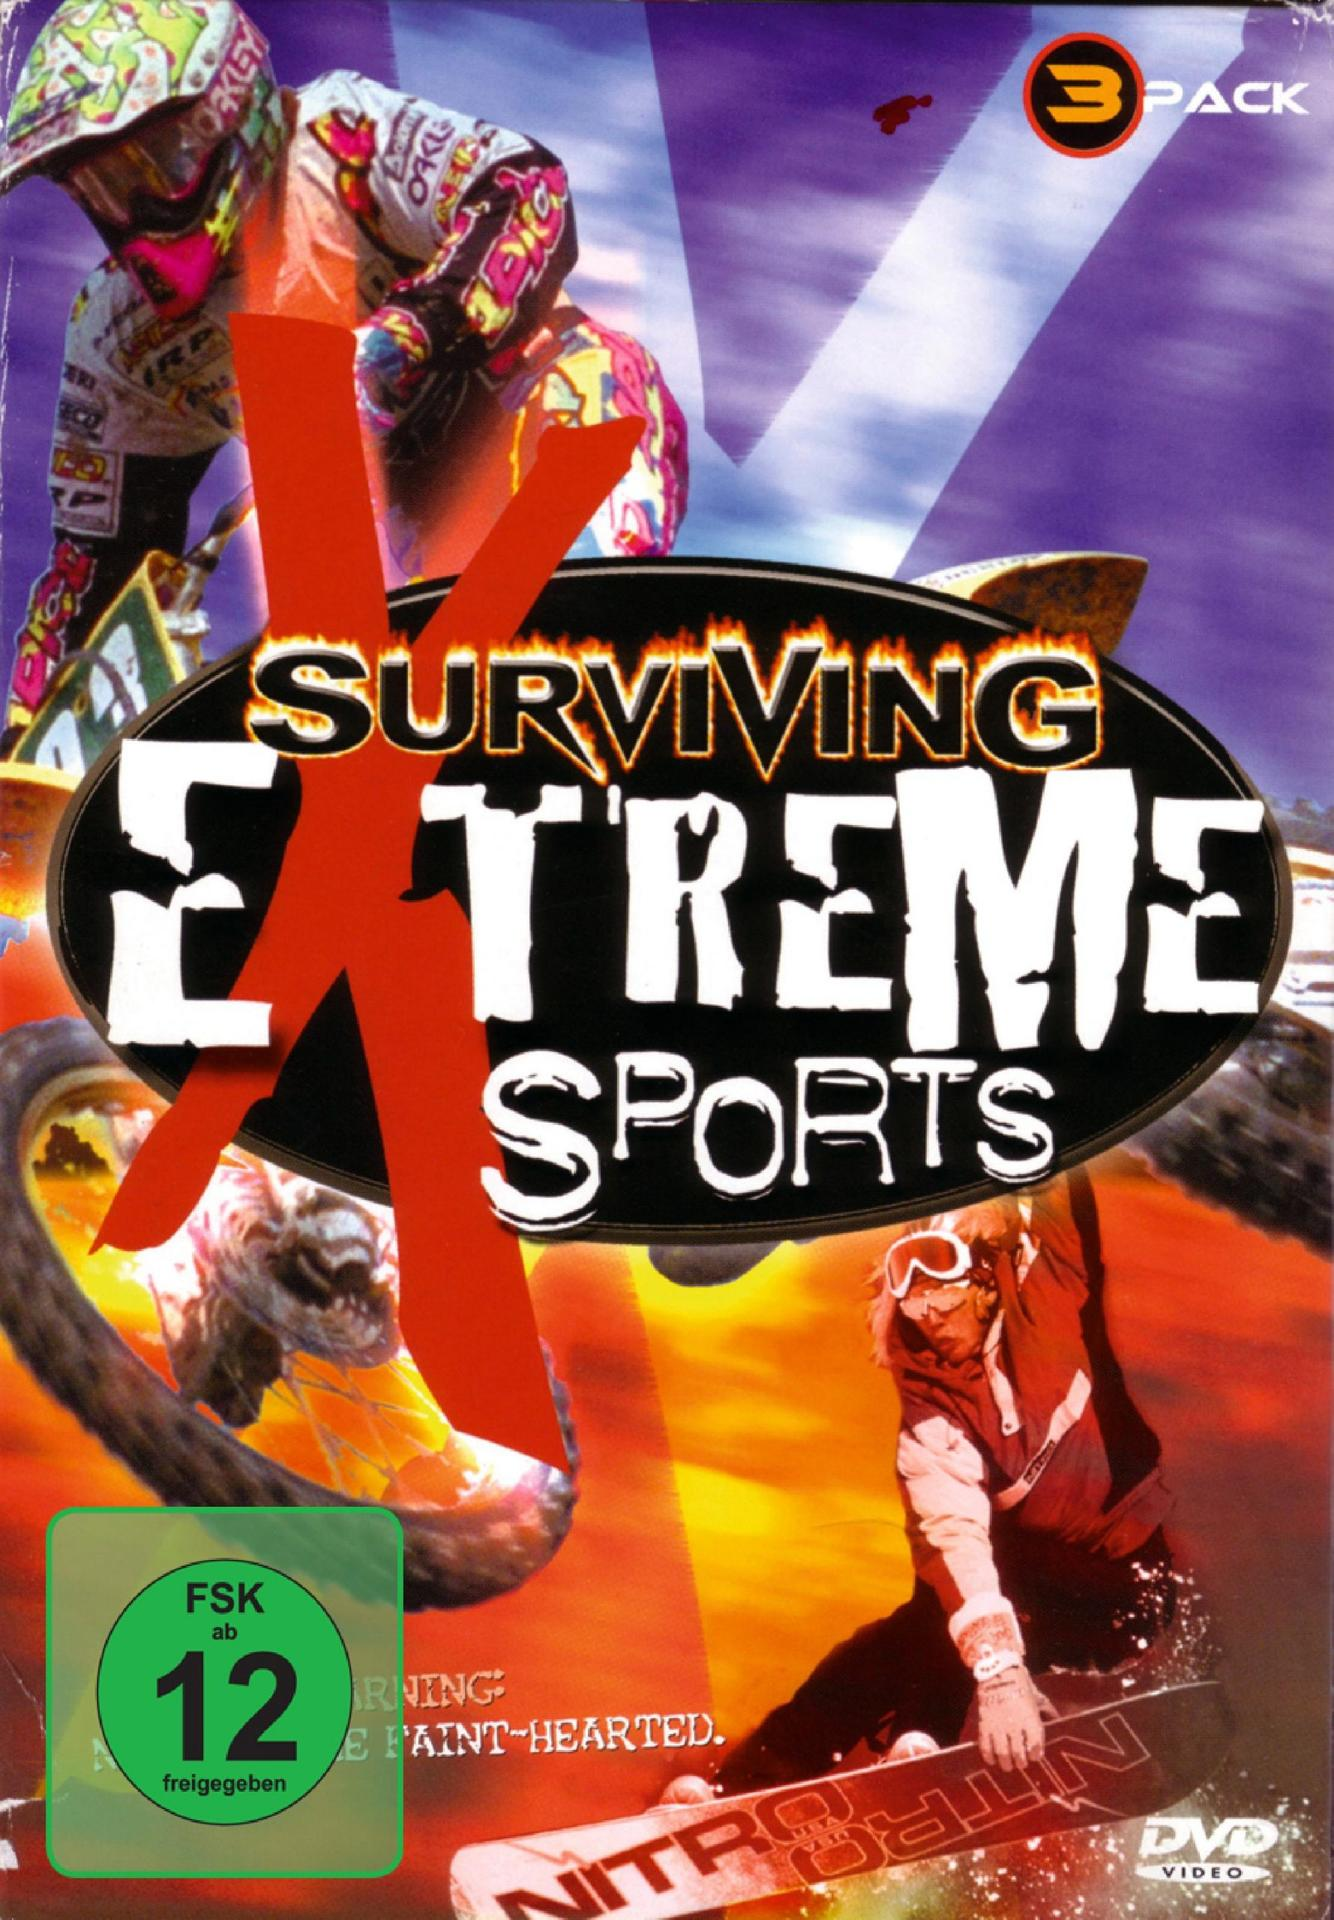 DVD Surviving Sports Extreme